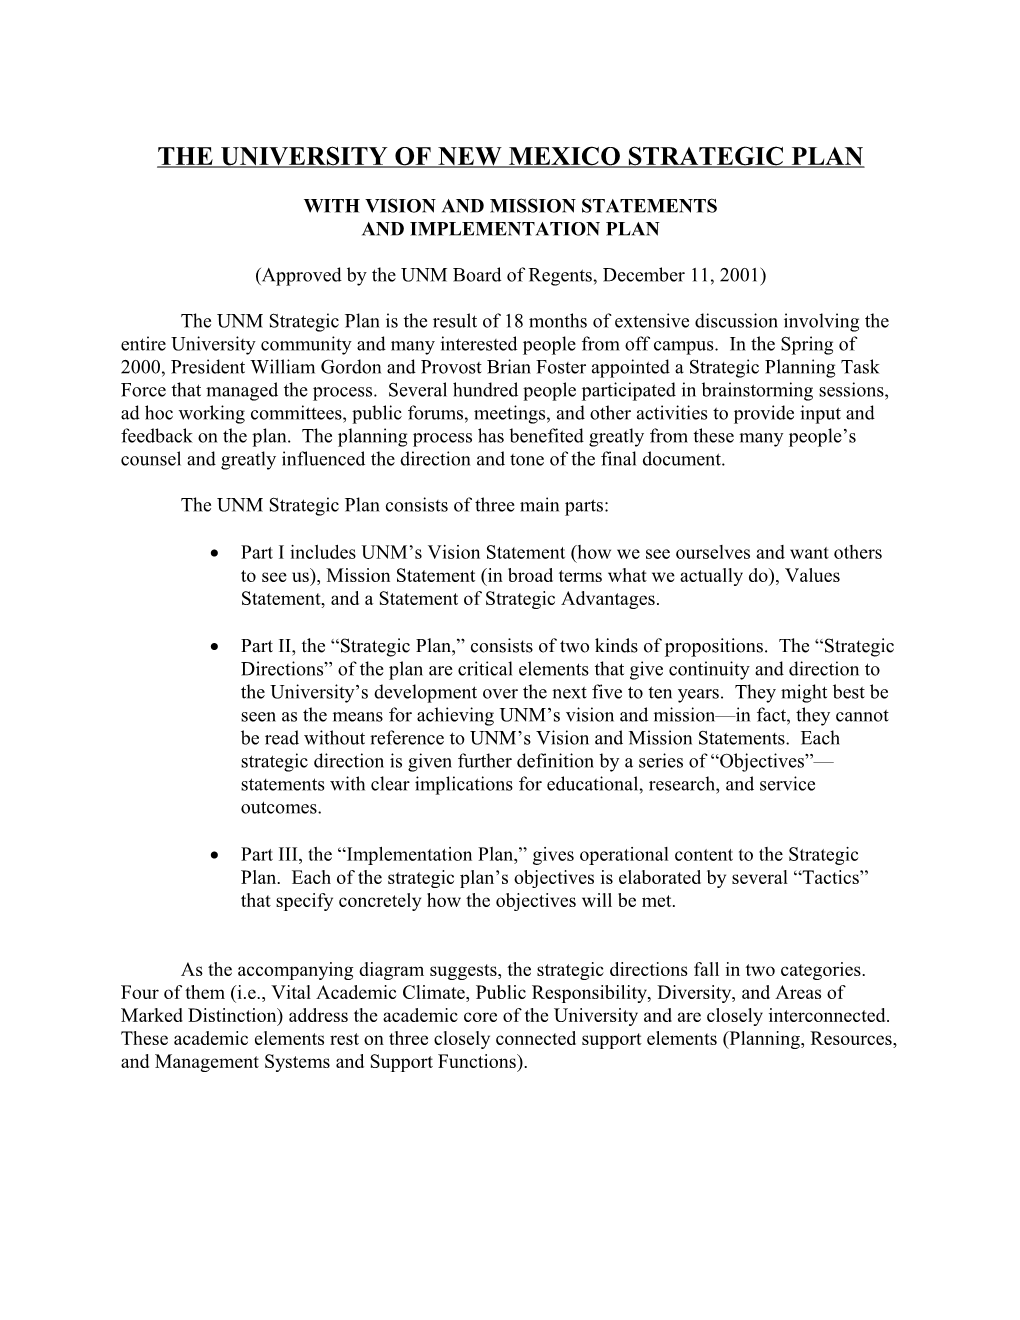 The University of New Mexico Strategic Plan